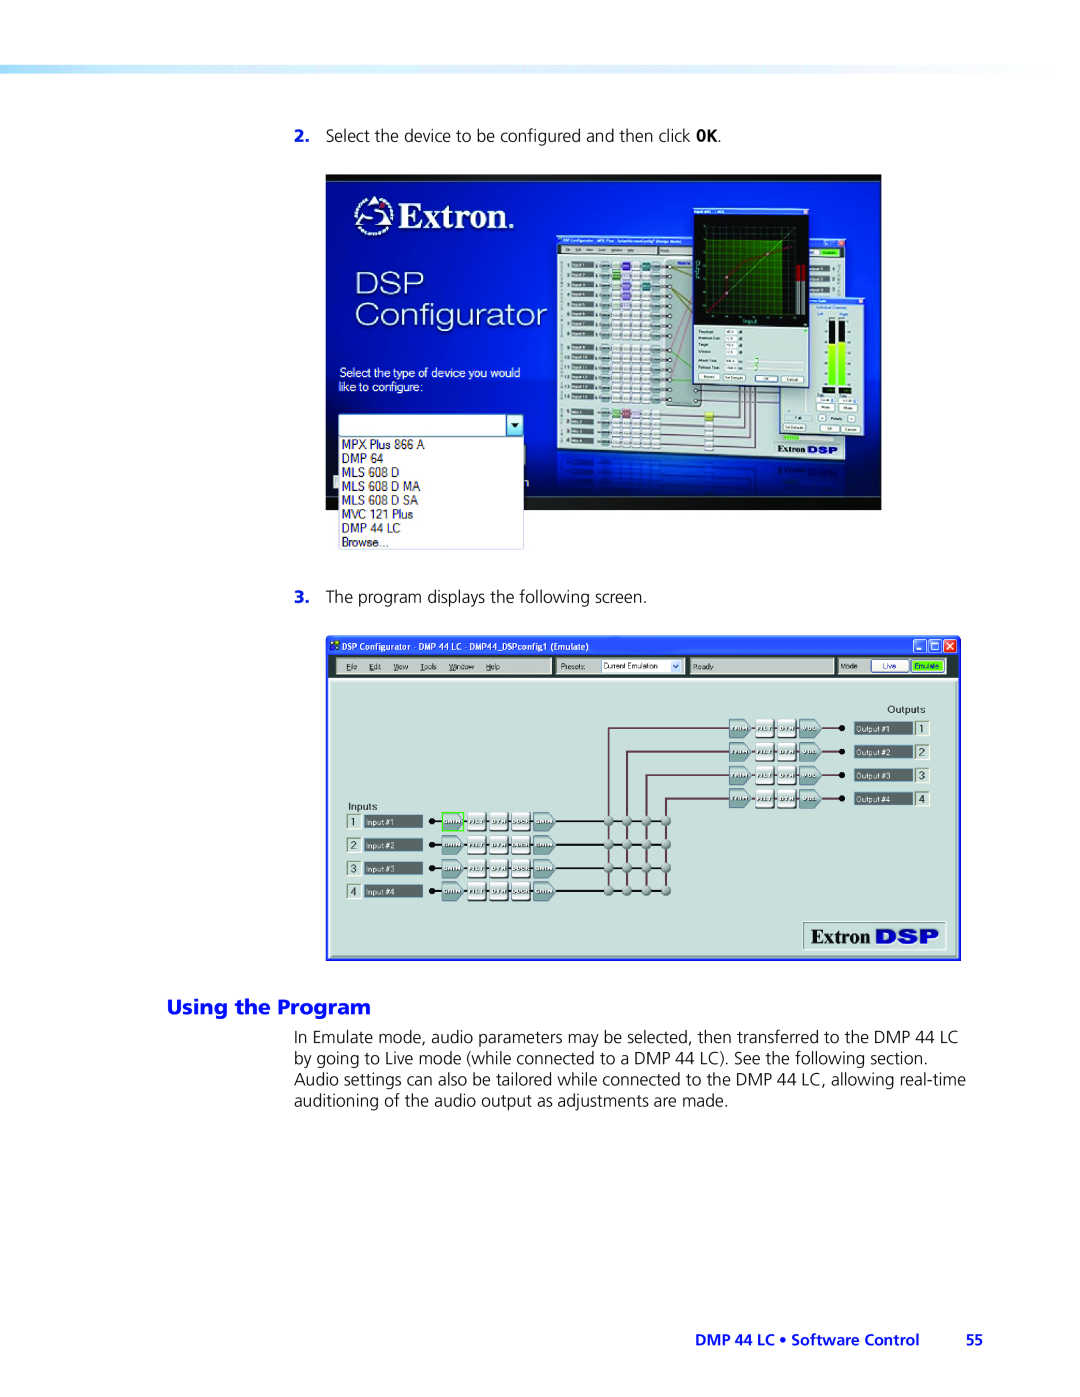 Extron electronic DMP 44 LC manual Using the Program 